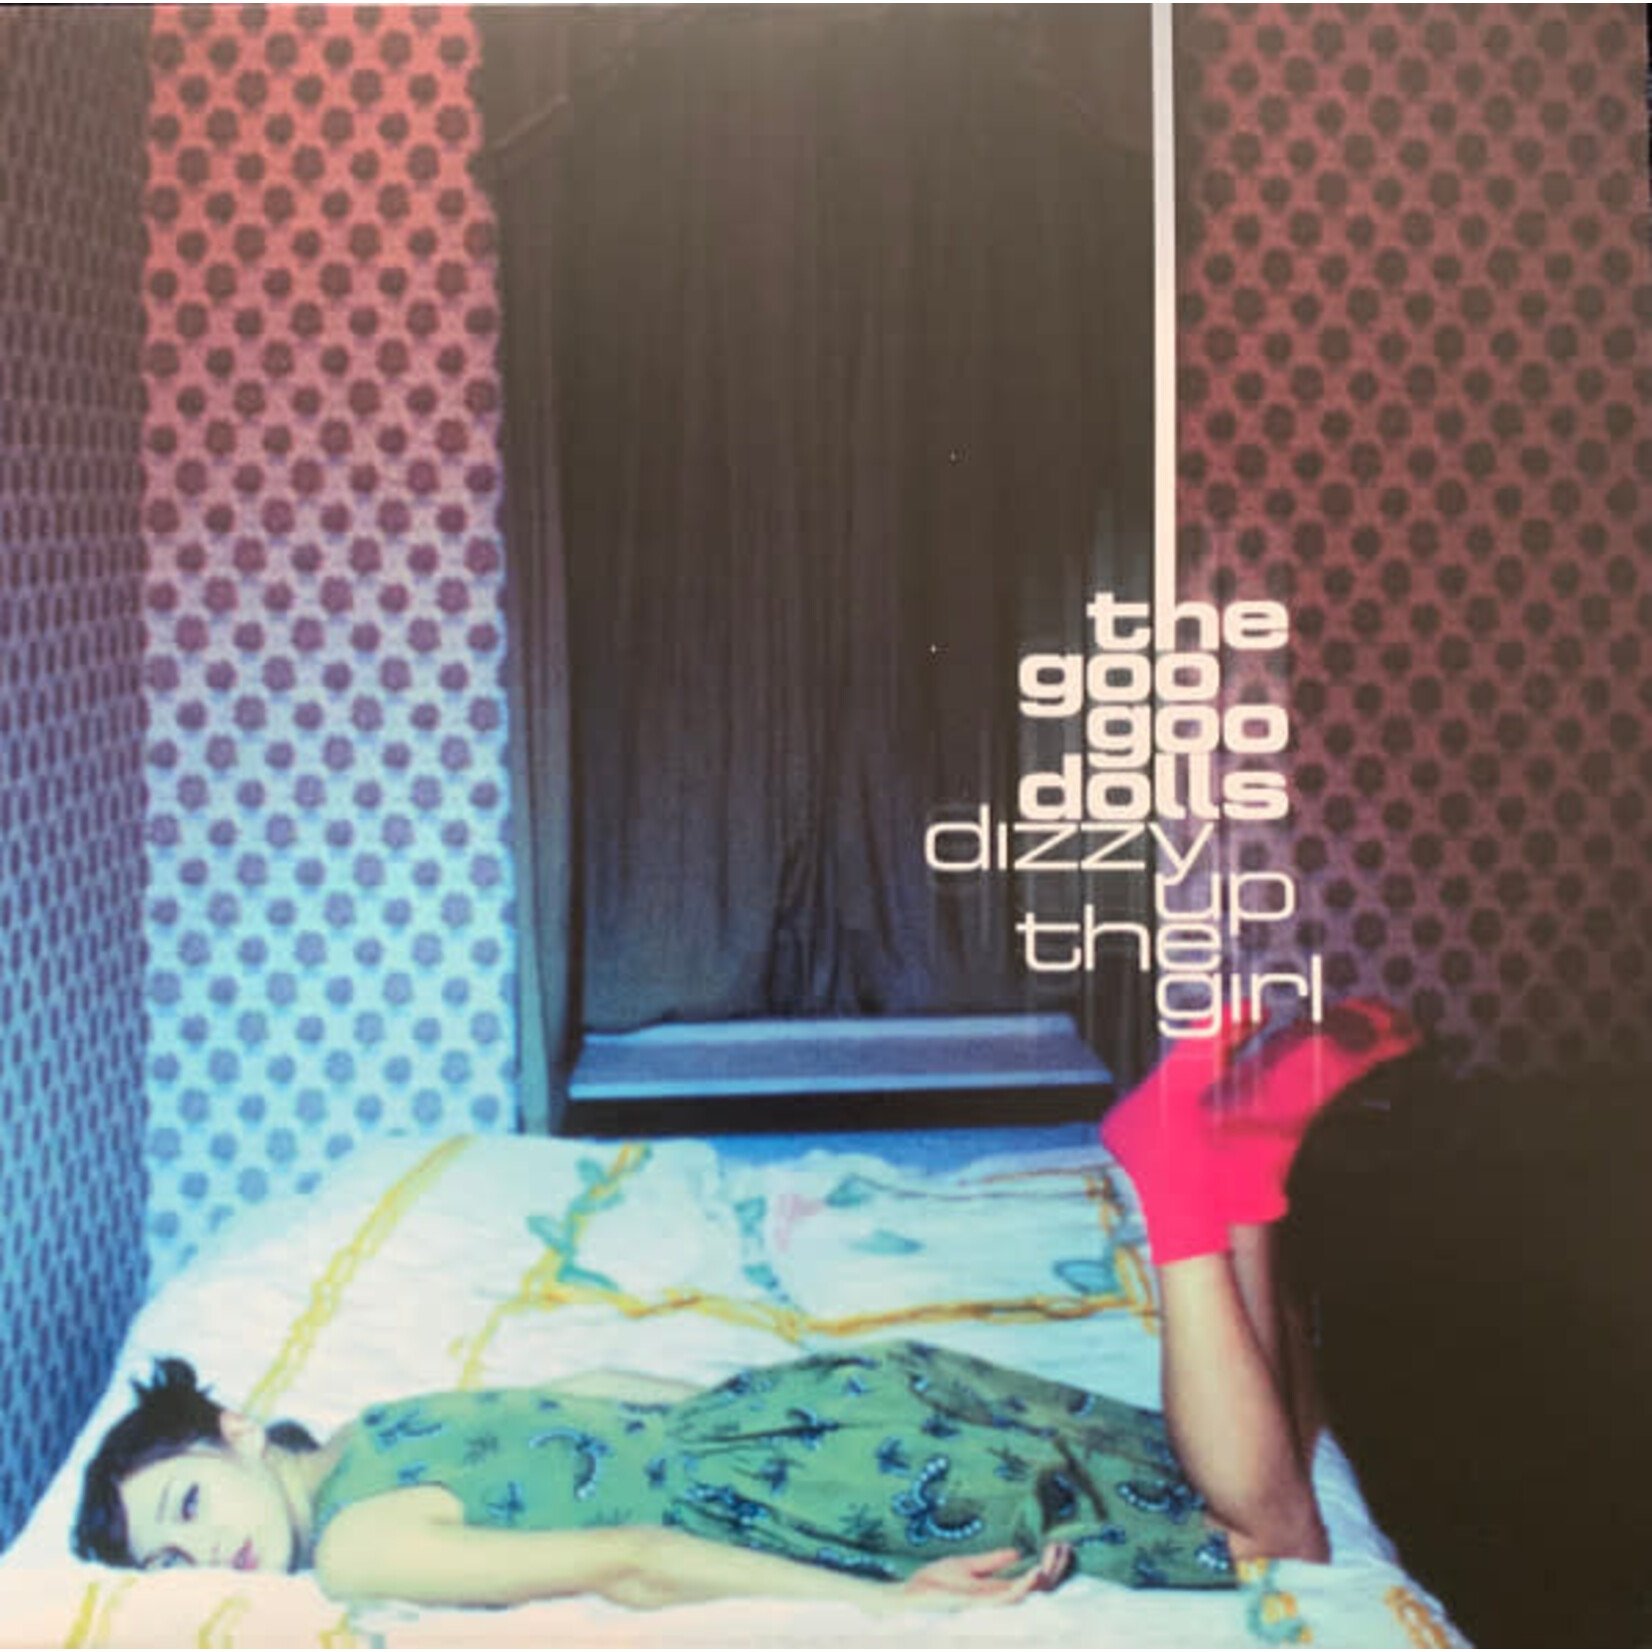 [New] Goo Goo Dolls - Dizzy Up The Girl (25th Anniversary, metallic silver vinyl)